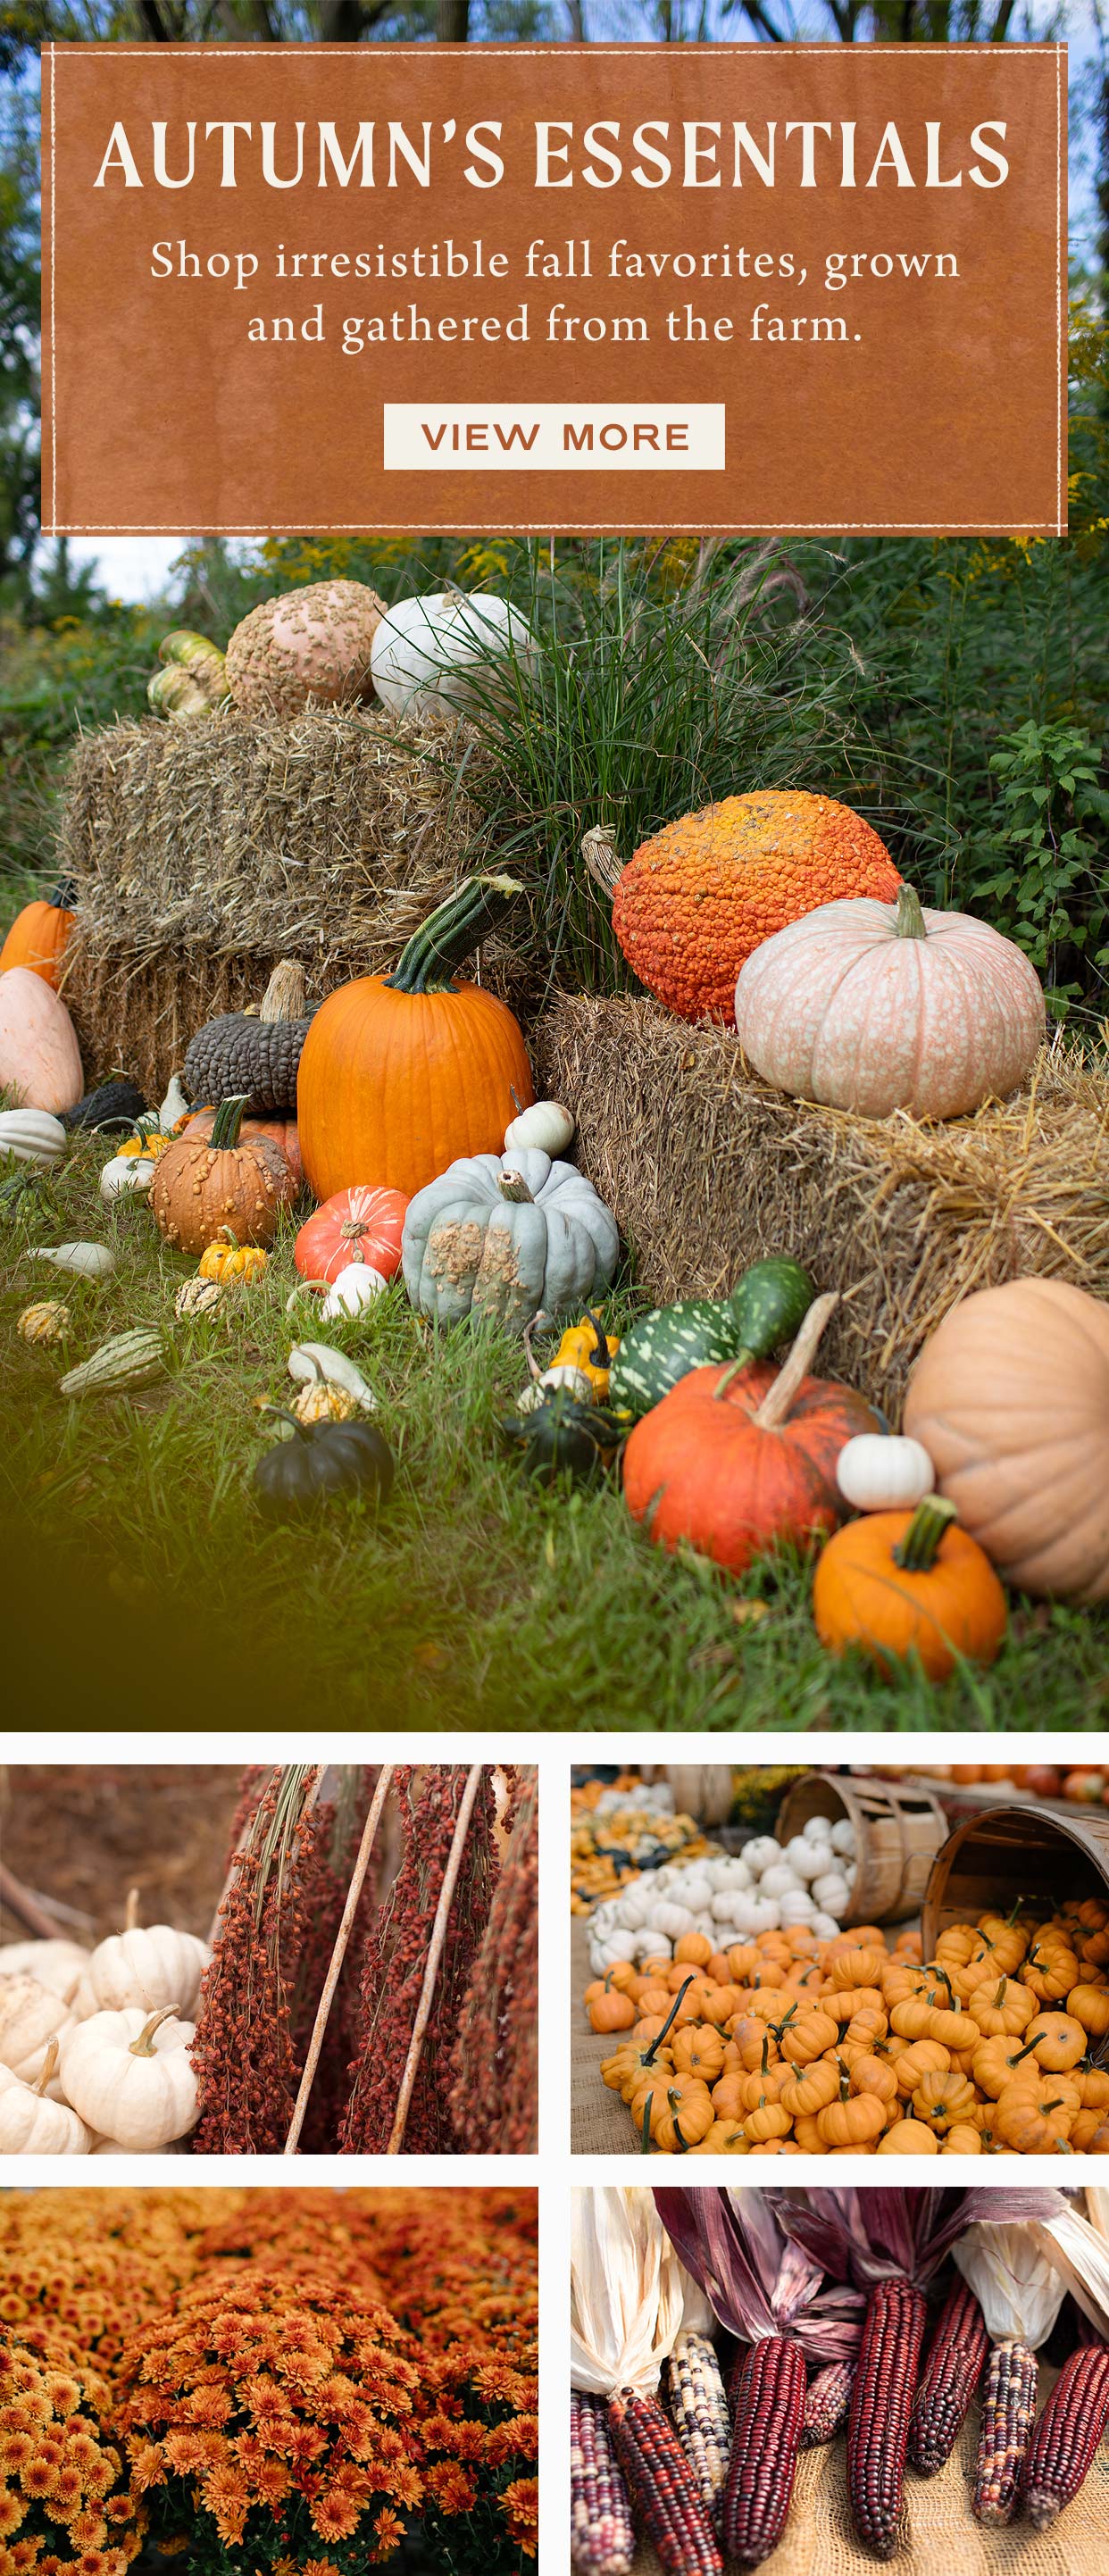 Autumn's Essentials at Hoen's Garden Center